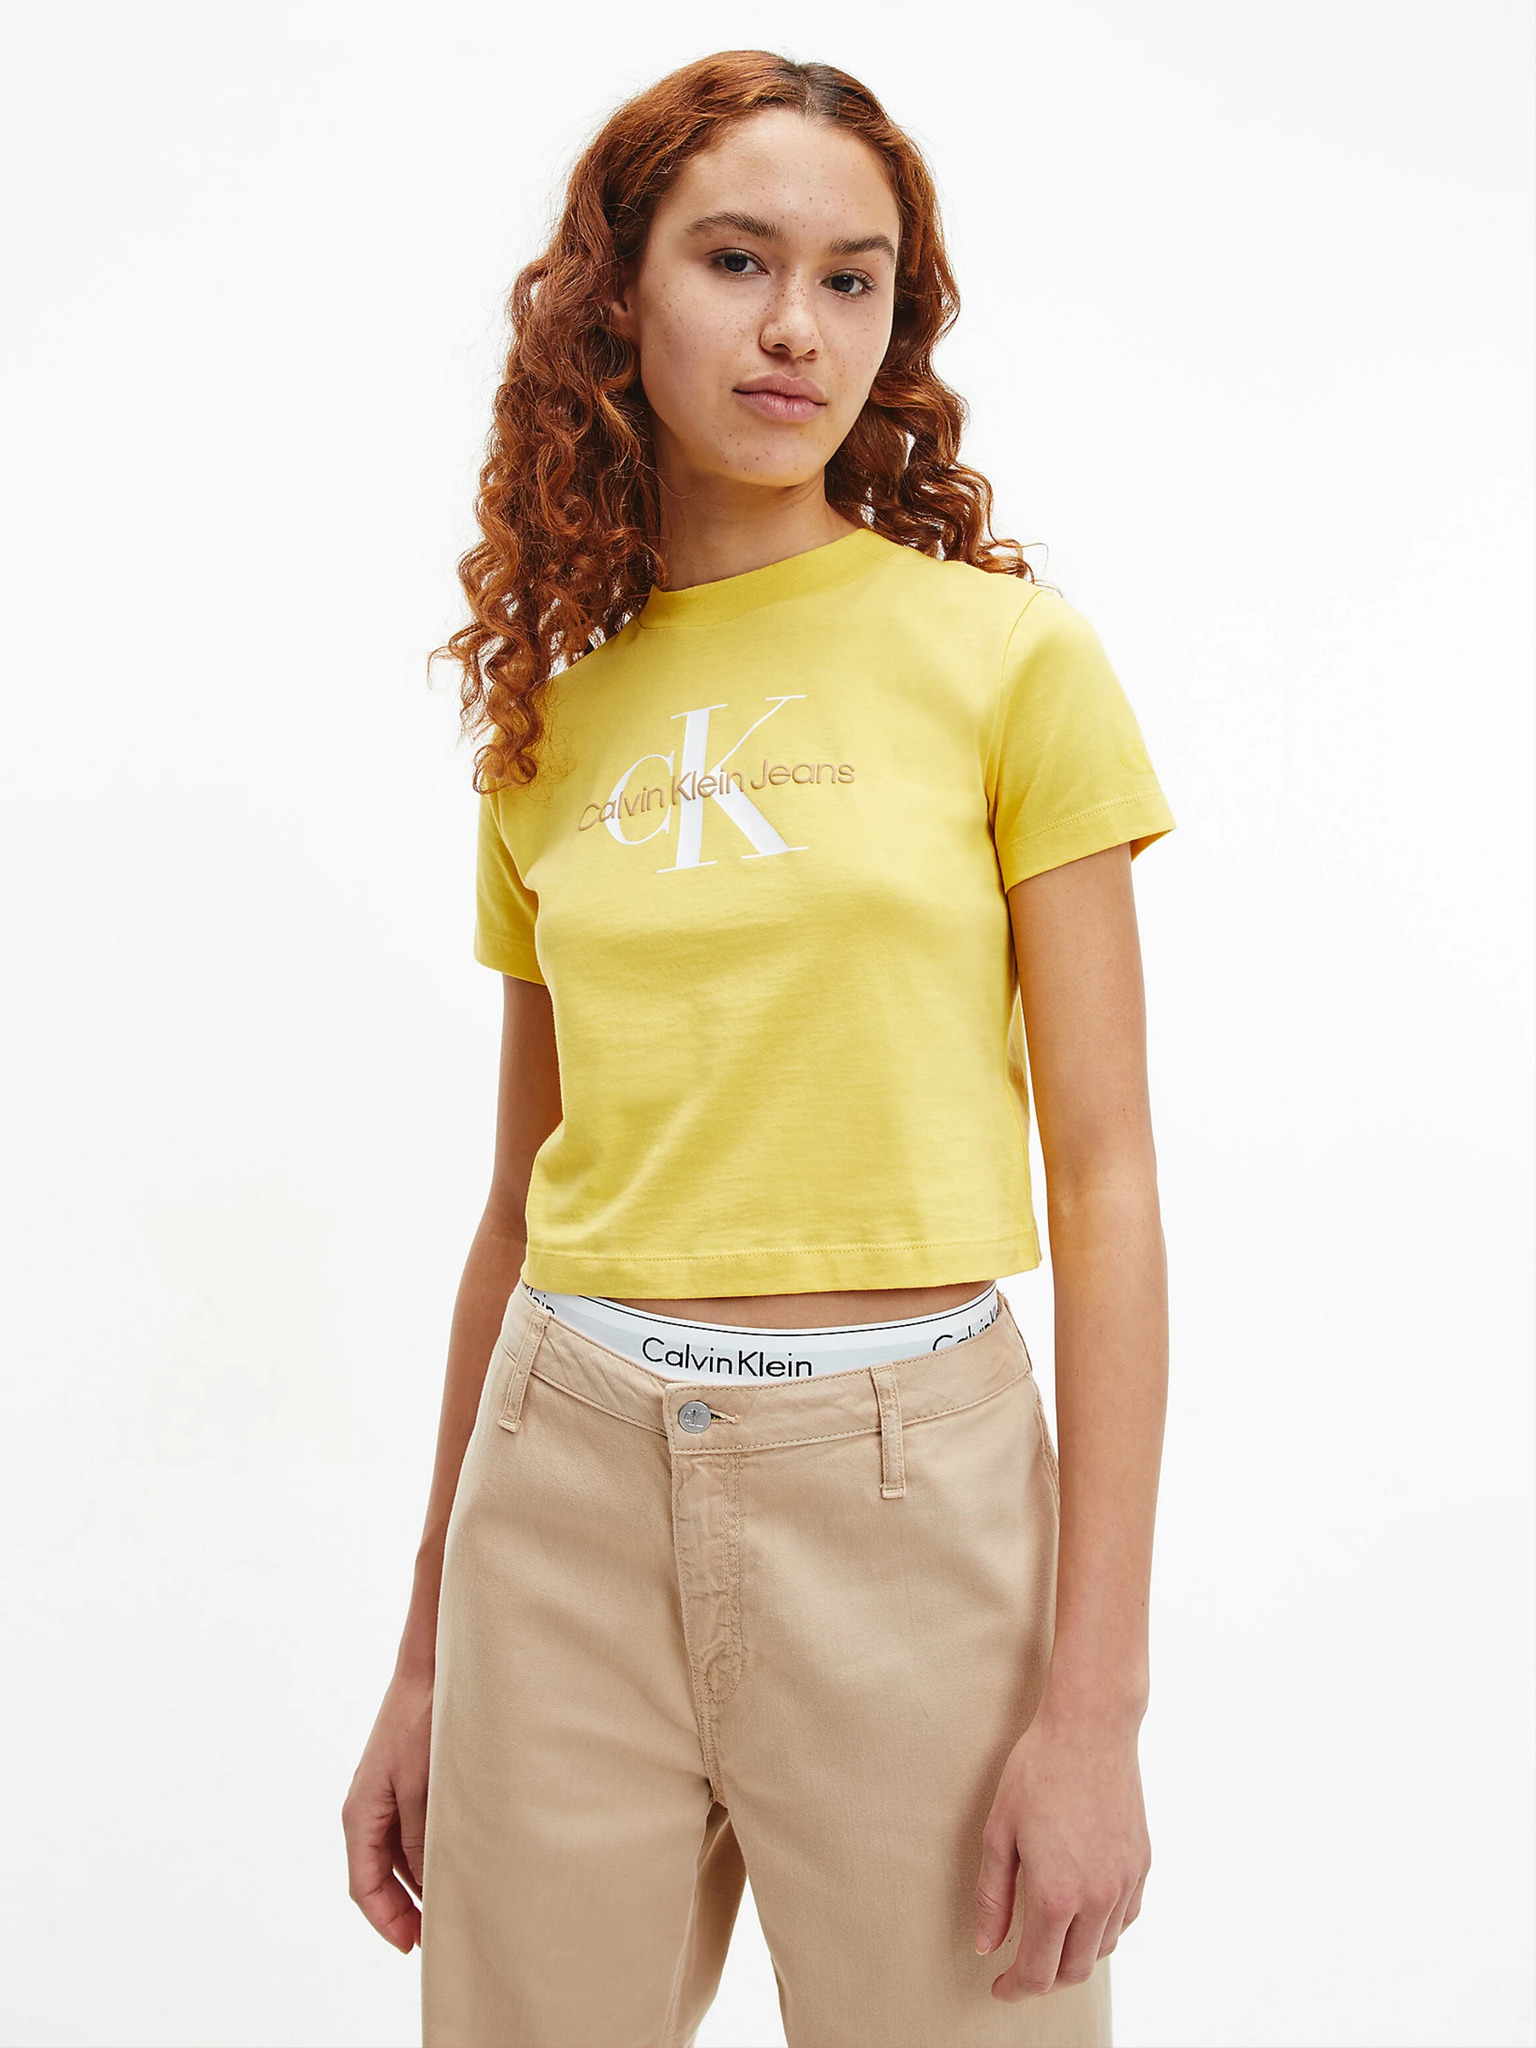 Fotografie Žluté dámské tričko s potiskem Calvin Klein - XS